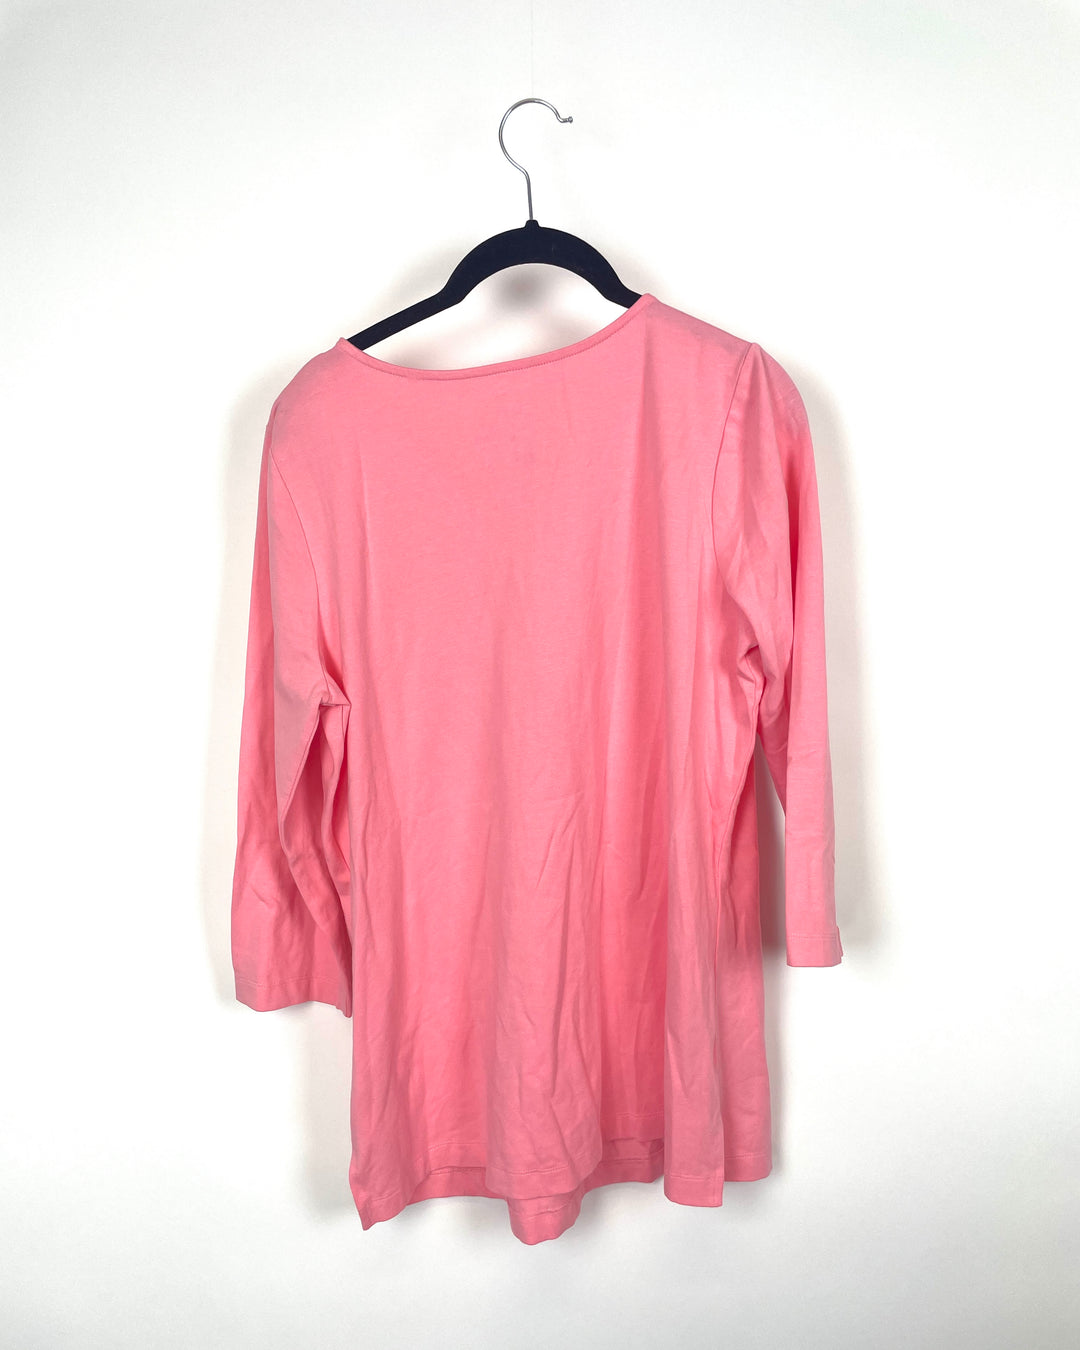 Pink Zippered Long Sleeve Top - Small/Medium